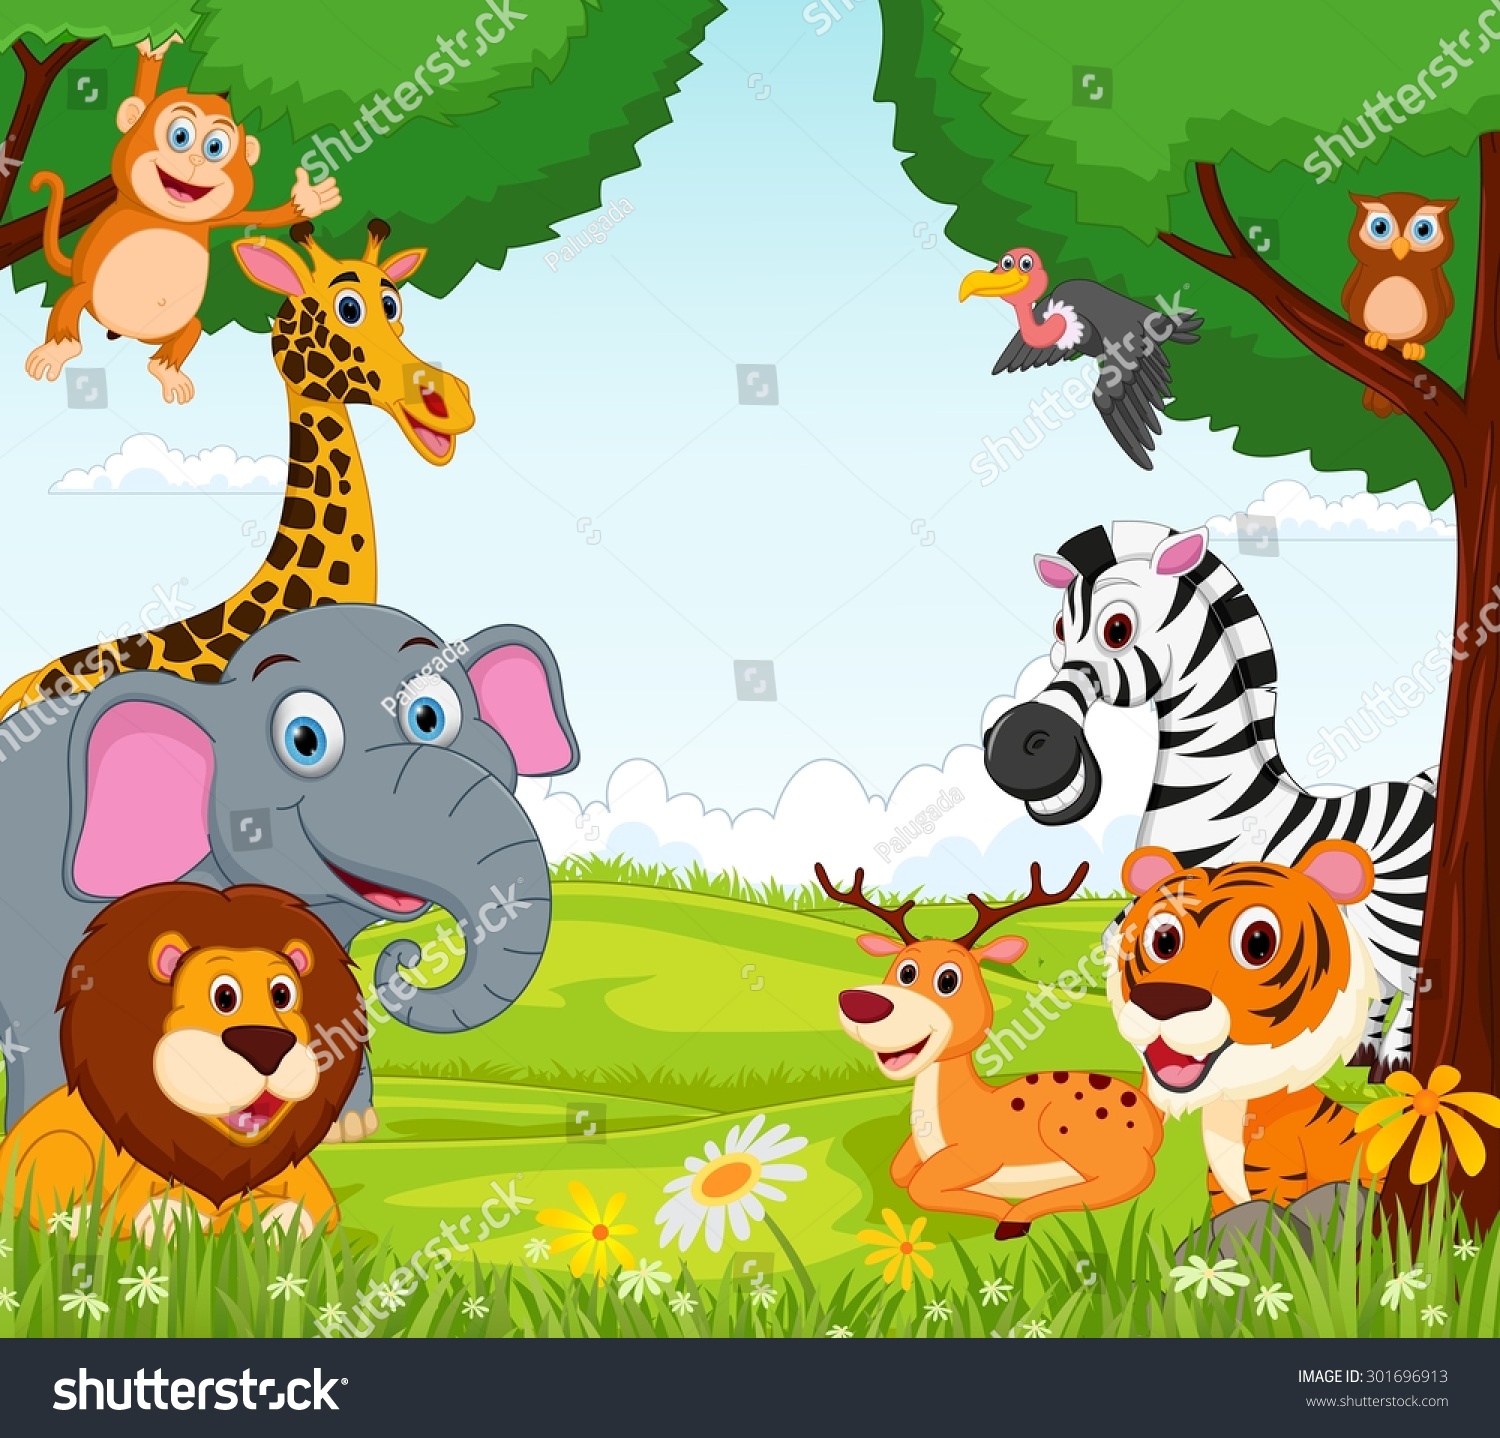 Animal Cartoon In The Jungle Stock Photo 301696913 : Shutterstock